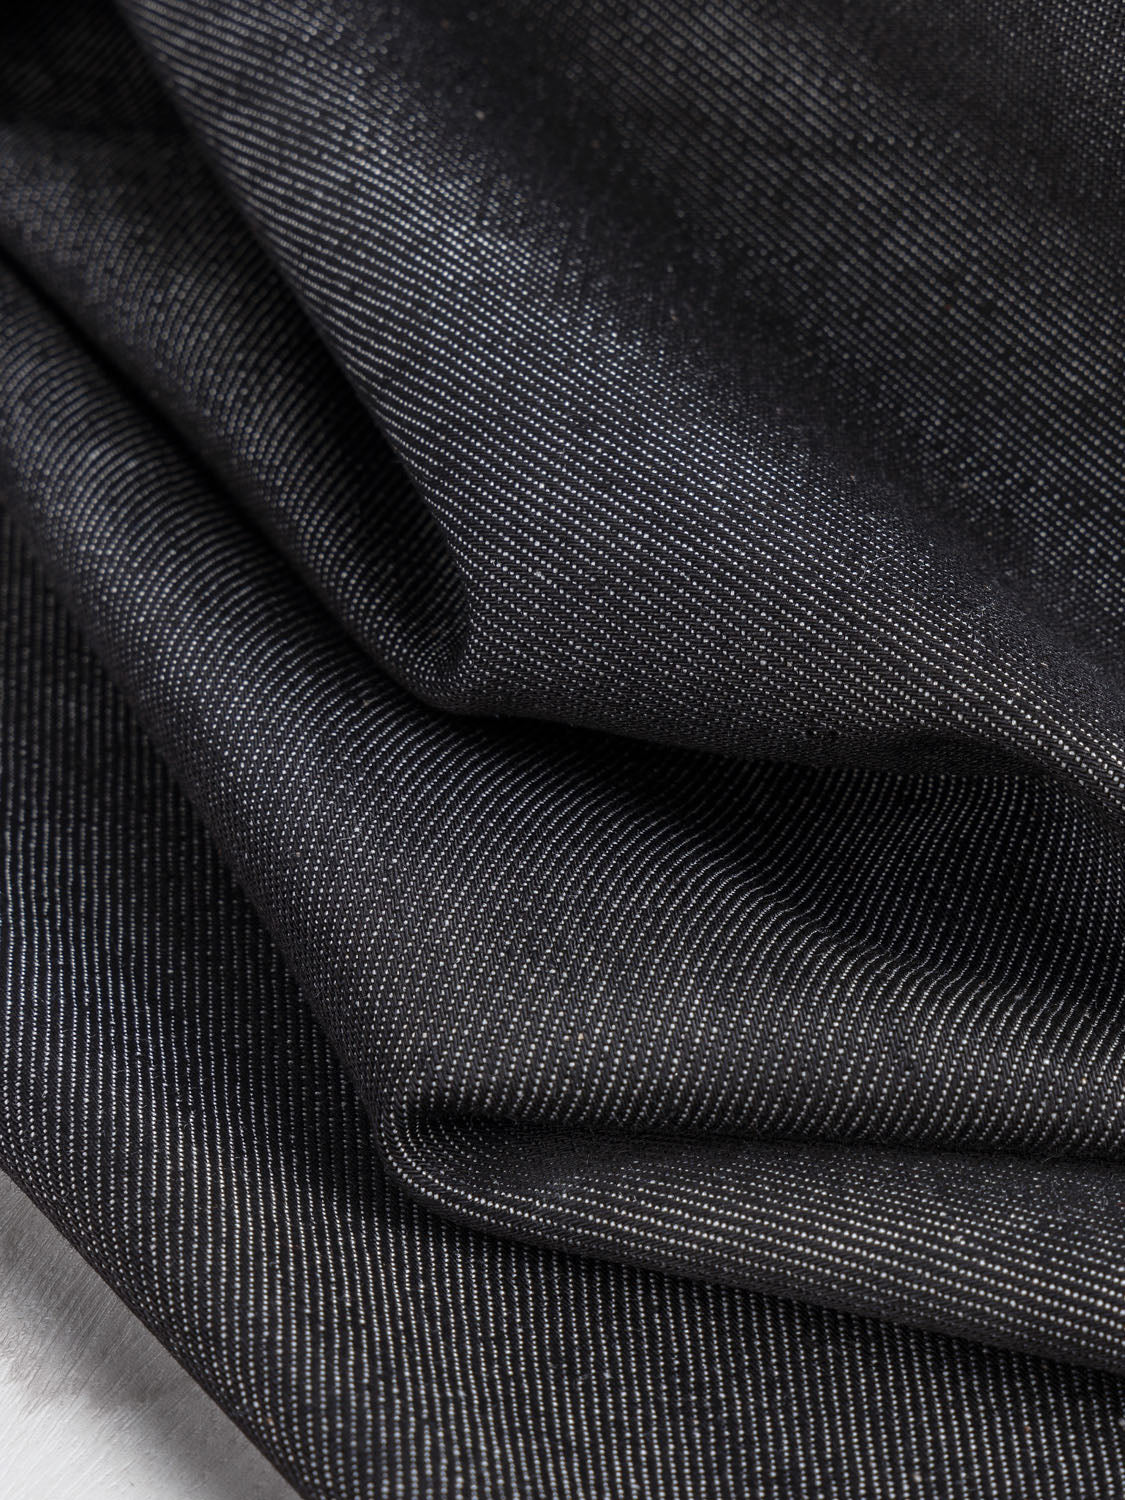 Denim Jacquard Fabric, Denim With Jacquard Fabric. Denim 100% Cotton Fabric  -  Canada